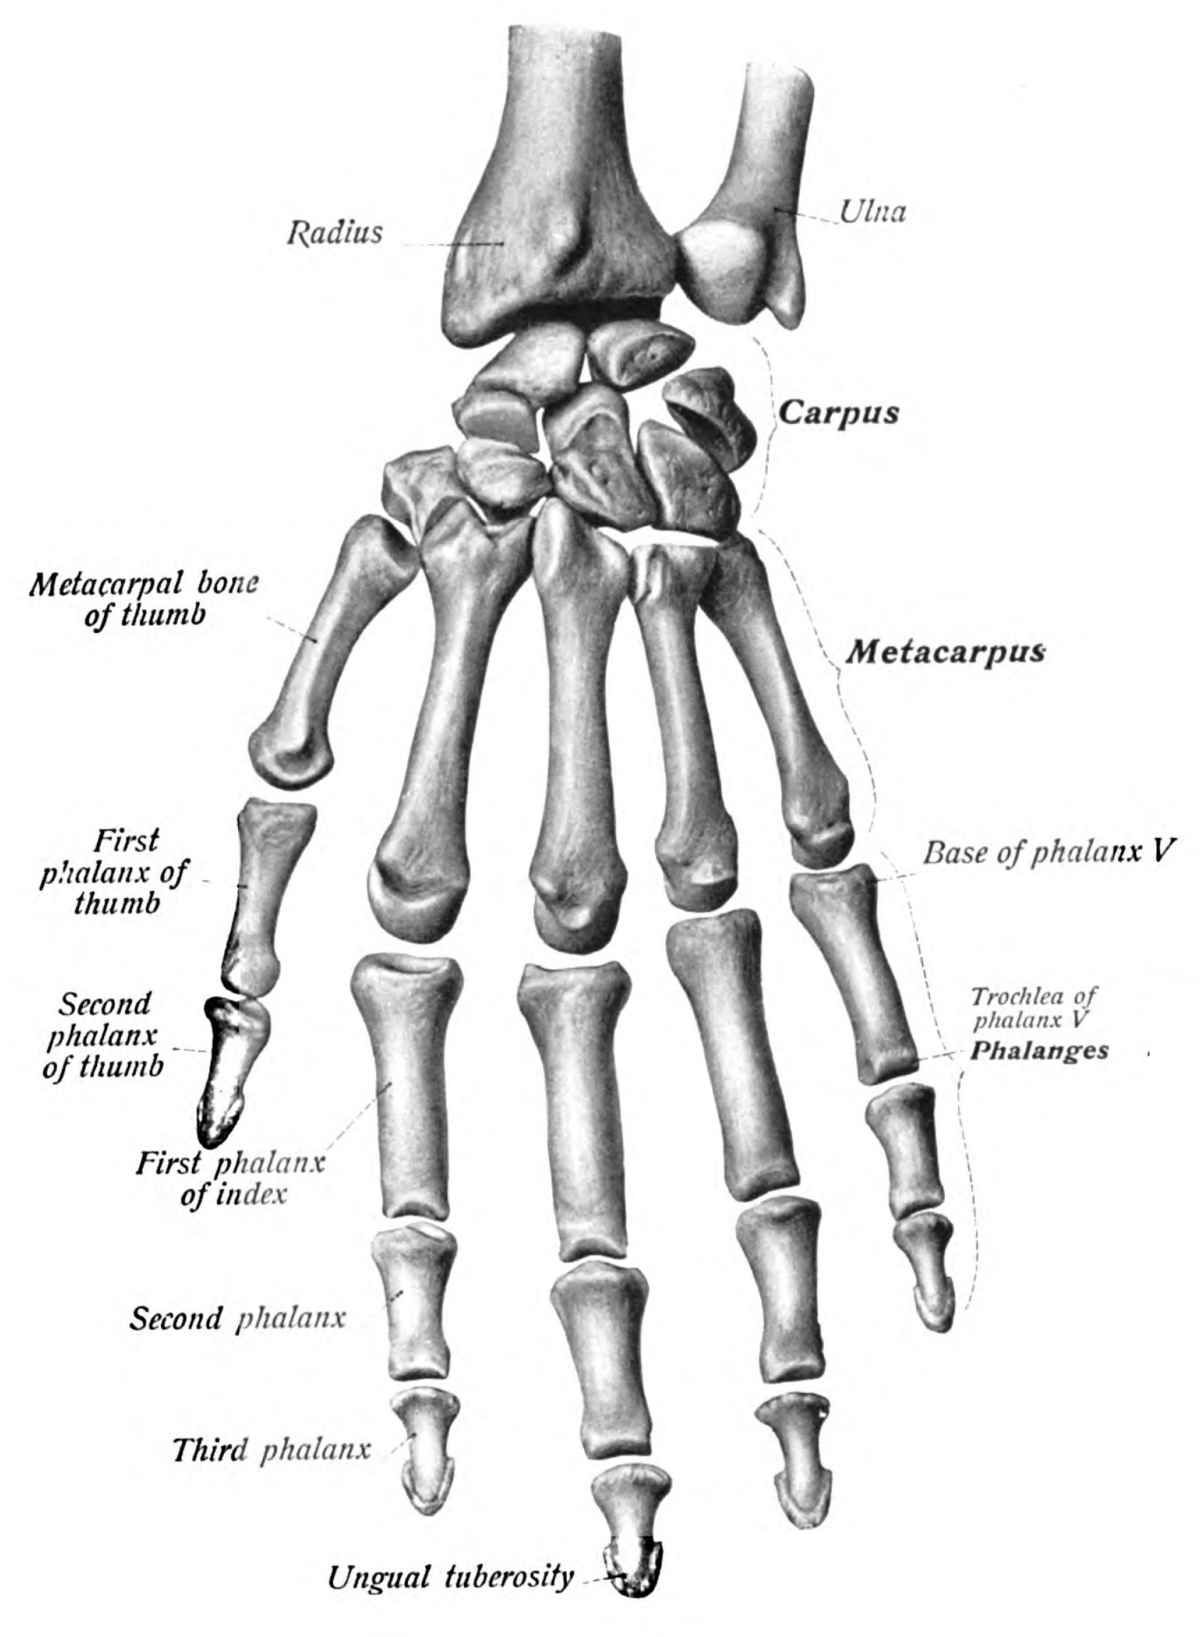 Thumb - Wikipedia